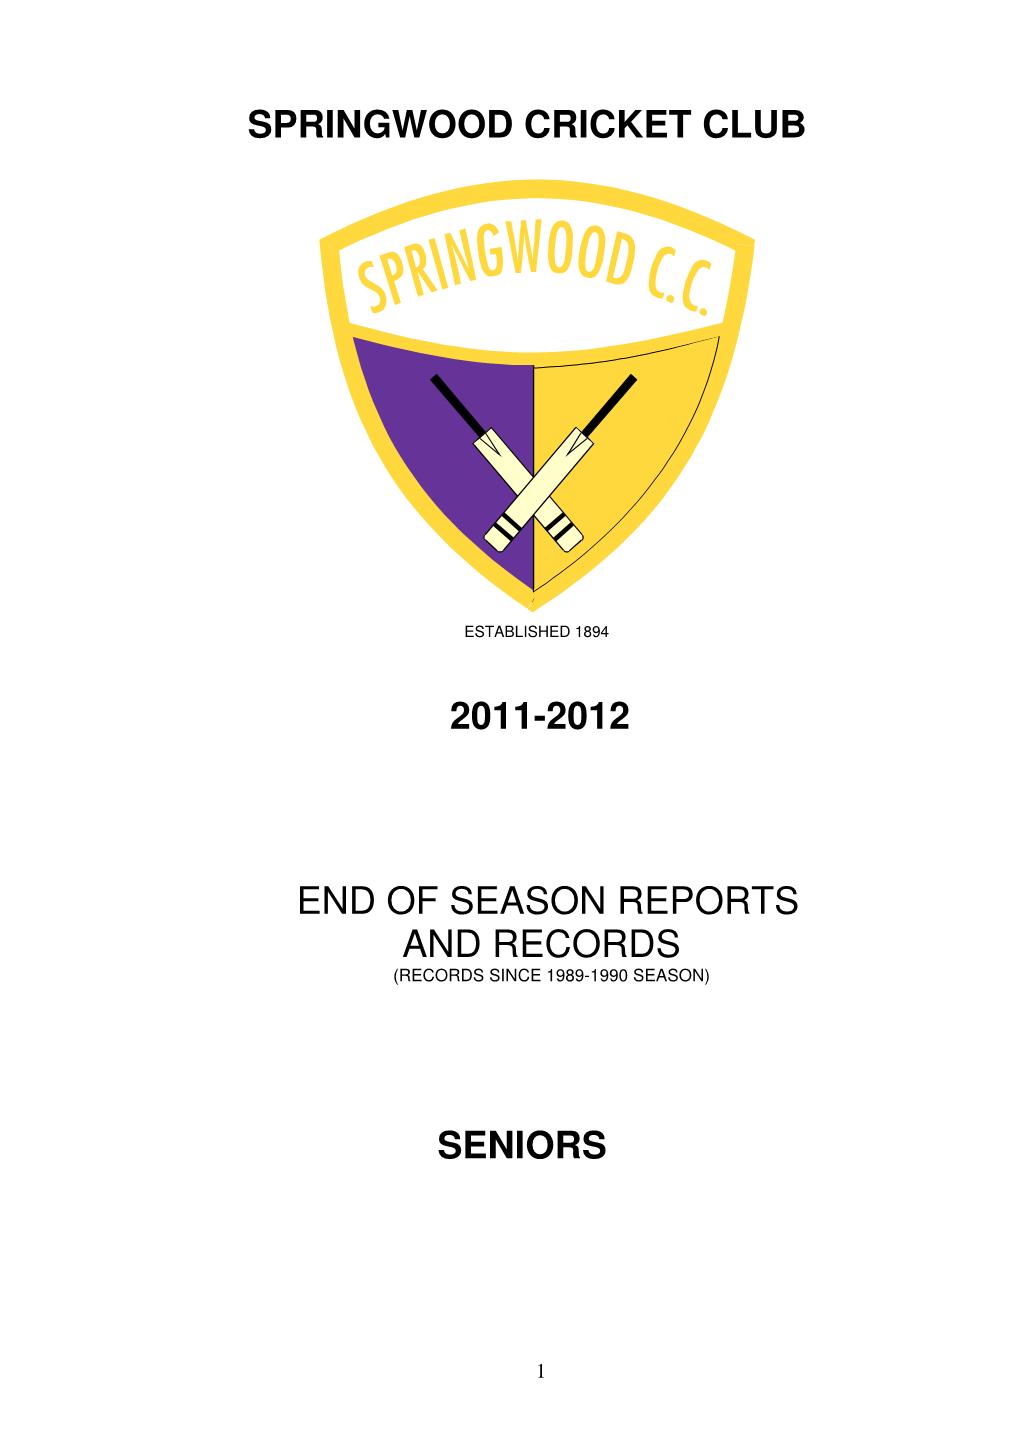 Springwood Cricket Club 2011-2012 End of Season Reports